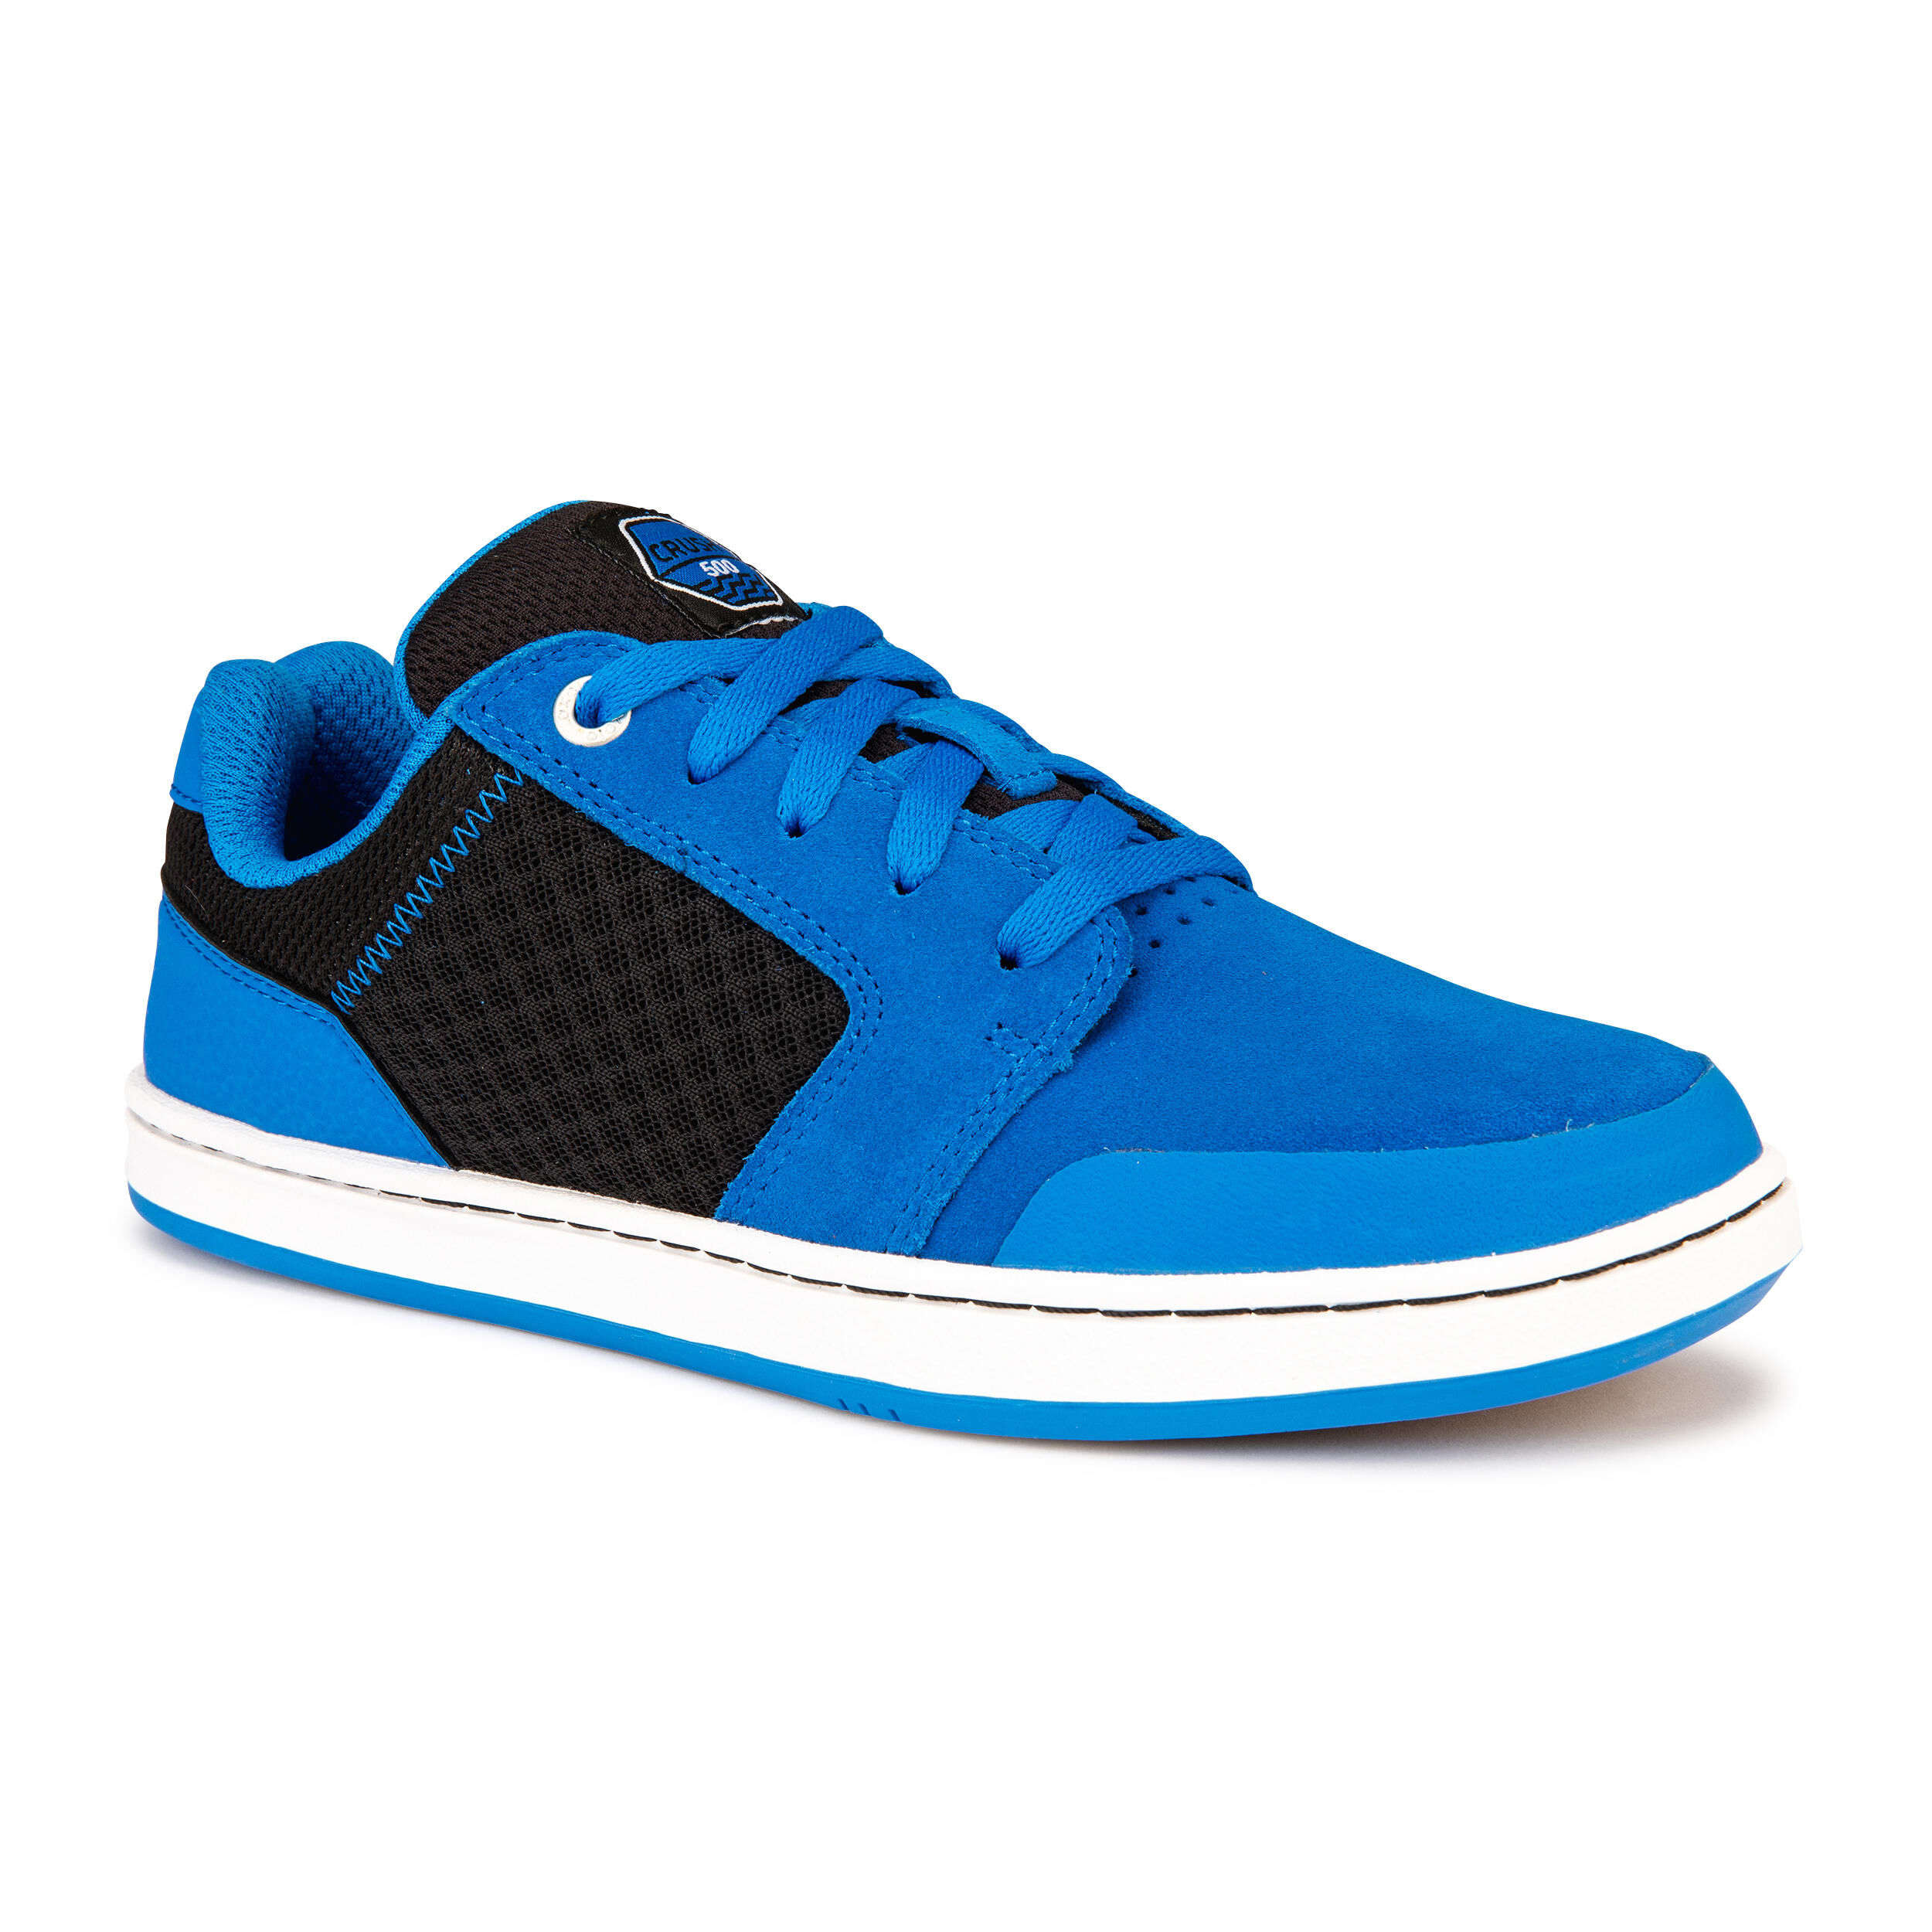 OXELO Crush 500 Kids' Low-Top Skate Shoes - Blue/Black